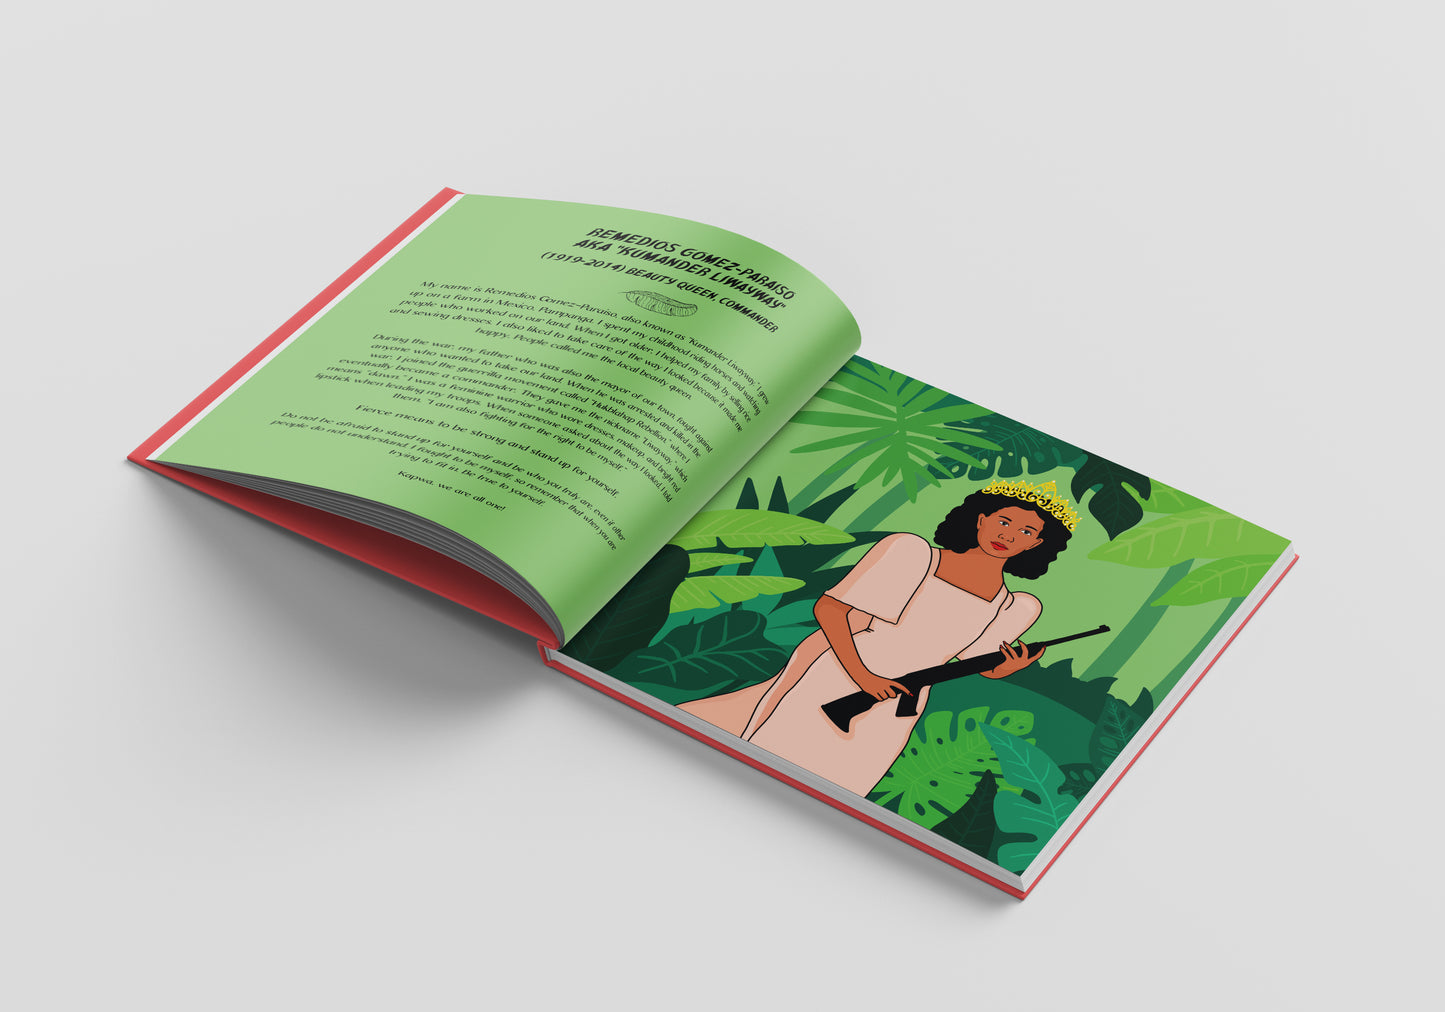 Kalayaan "Filipina Heroines of World War II" Children's Book